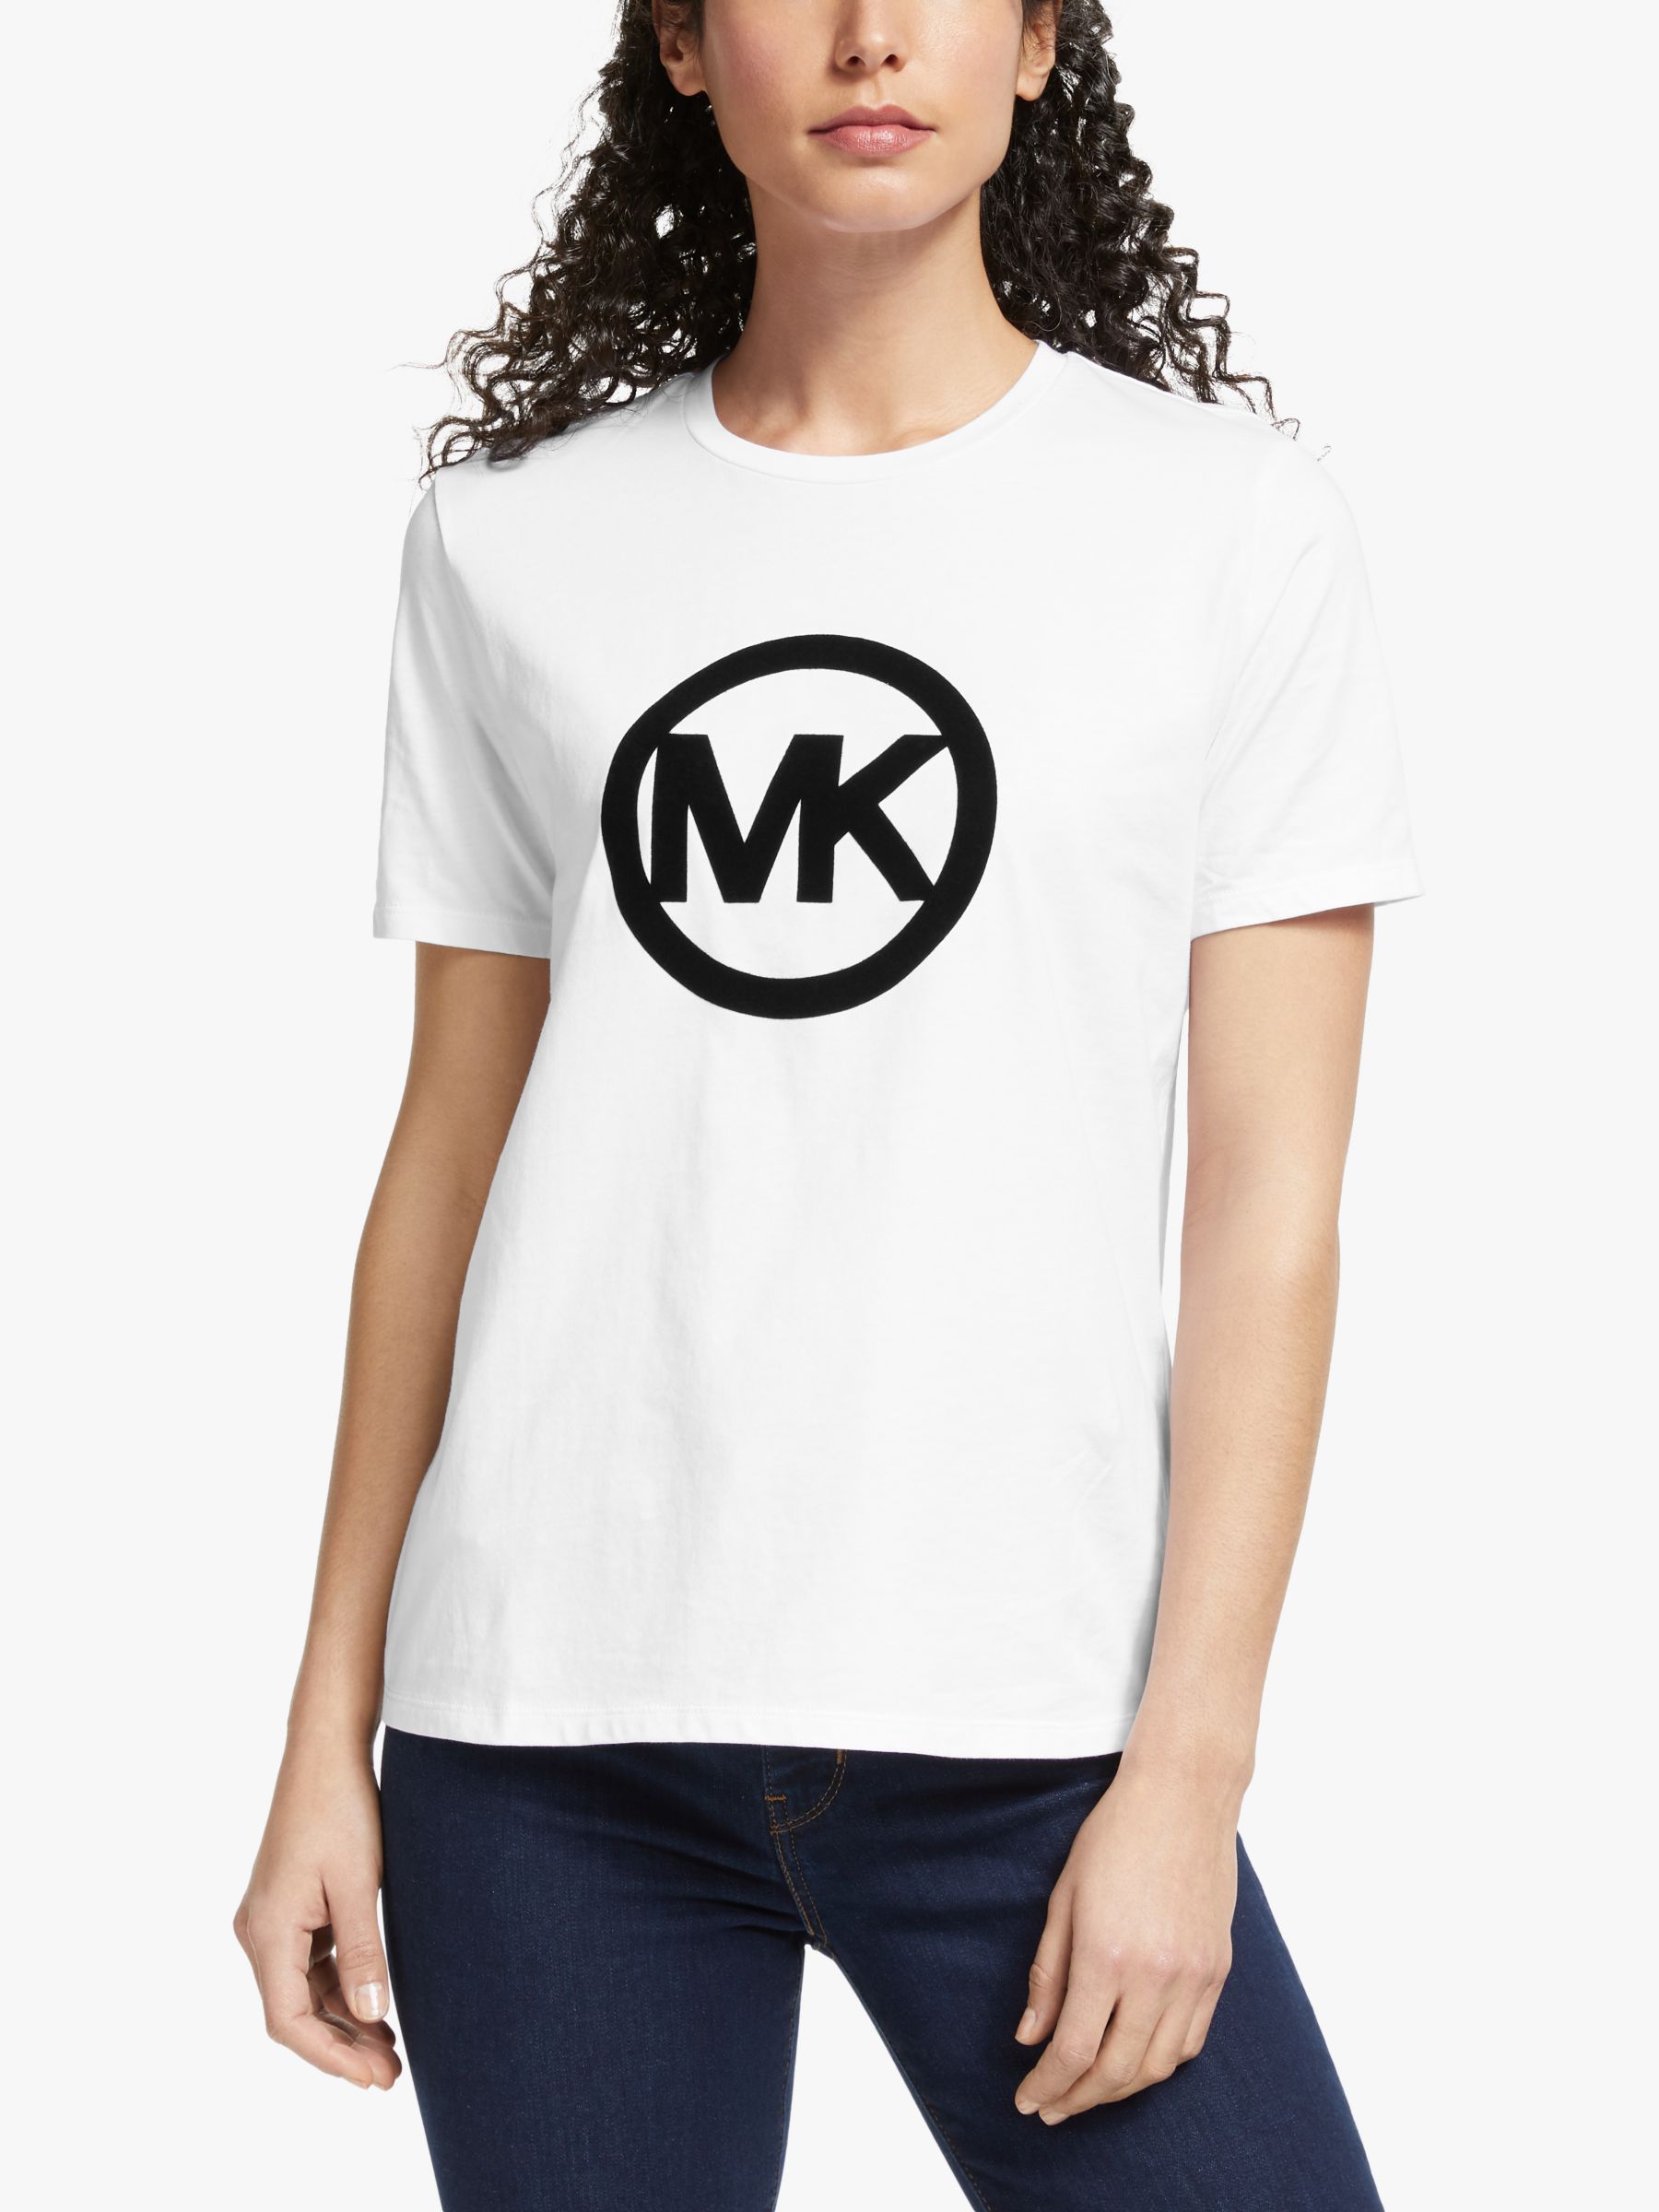 michael kors women's shirts